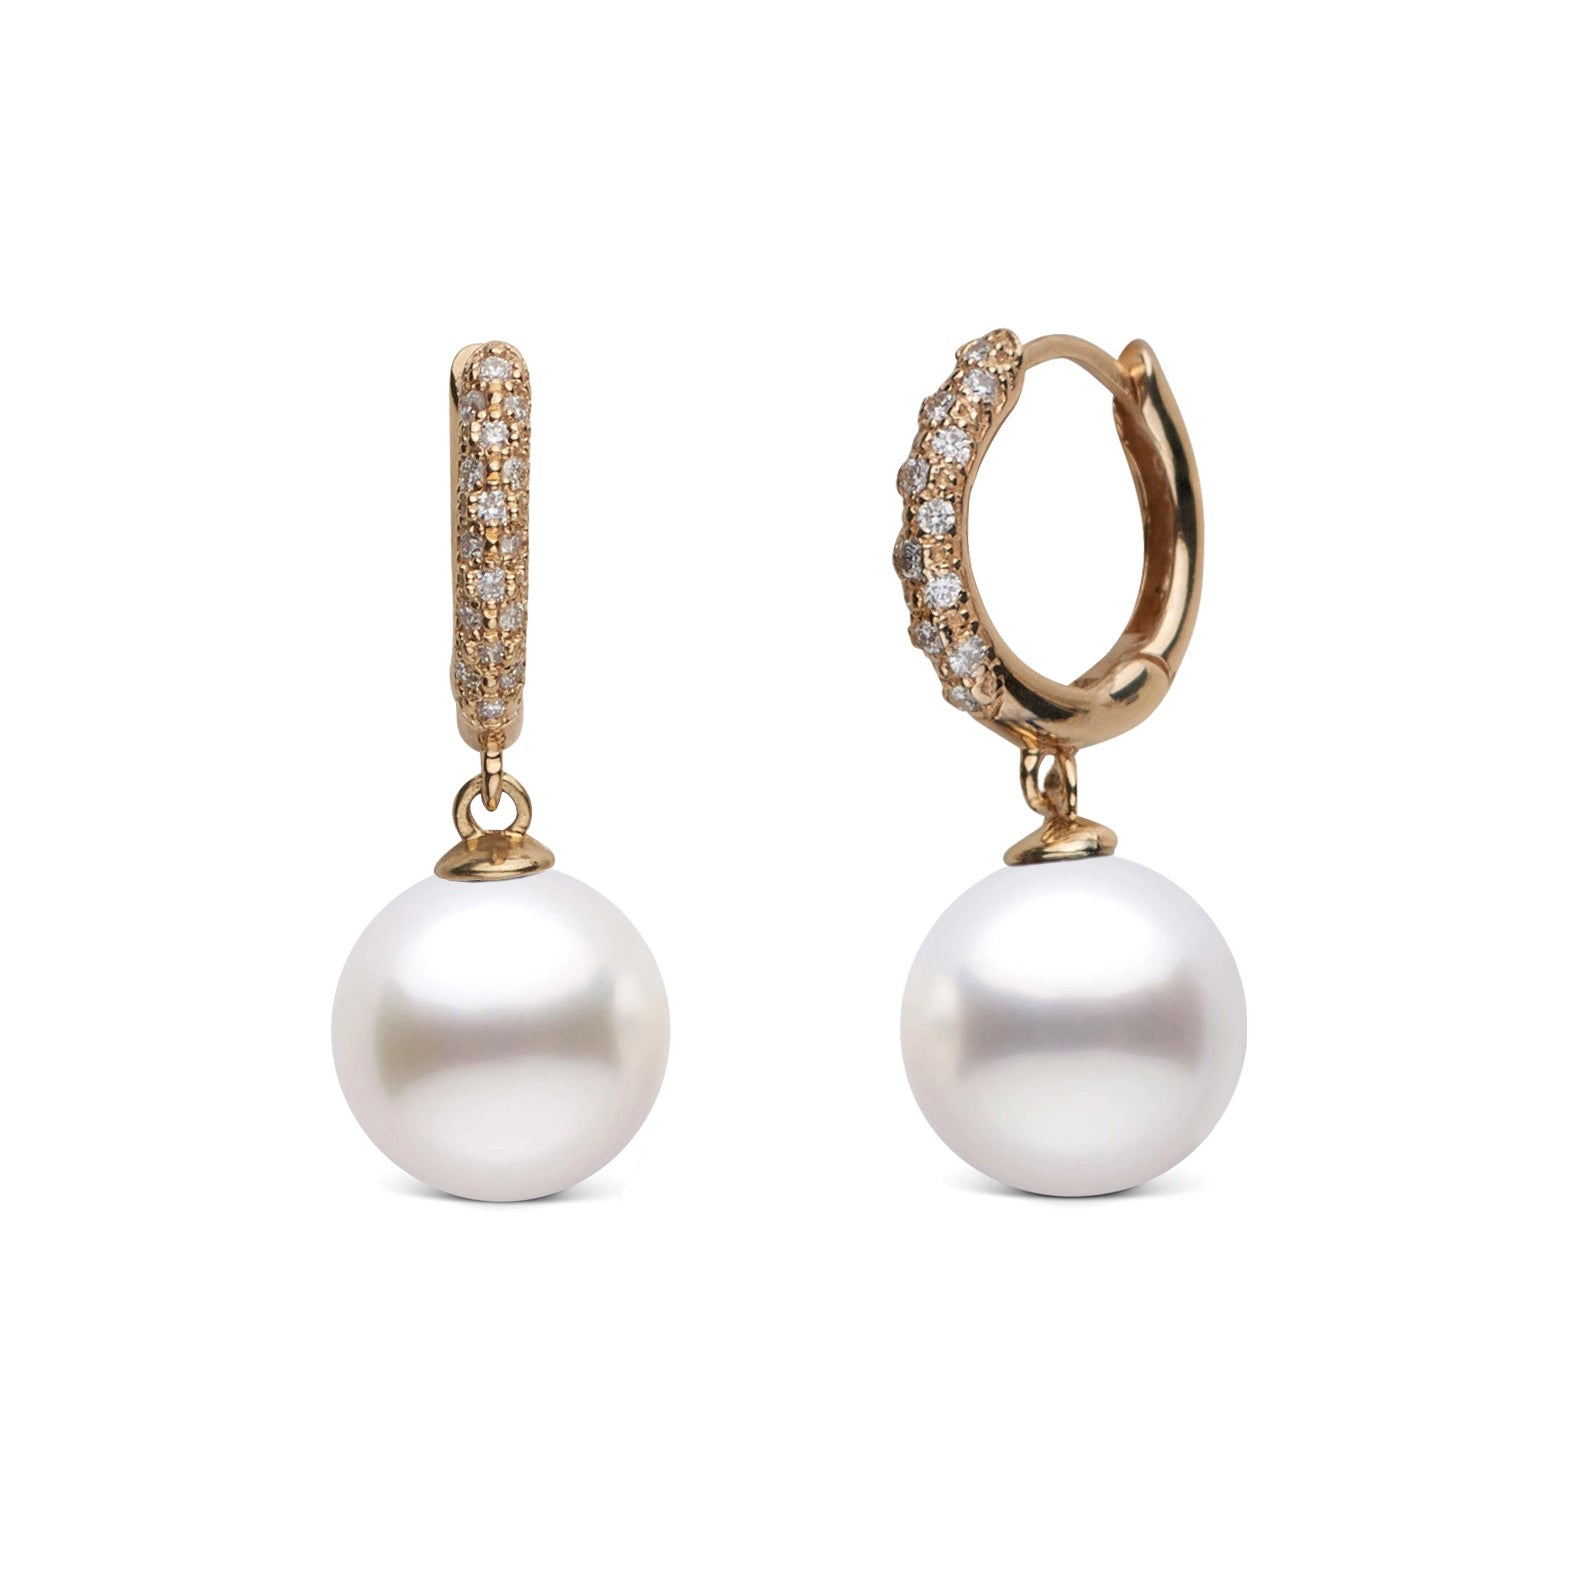 10.0-11.0 mm White South Sea Pearl & Pave Diamond Large Hoop Earrings